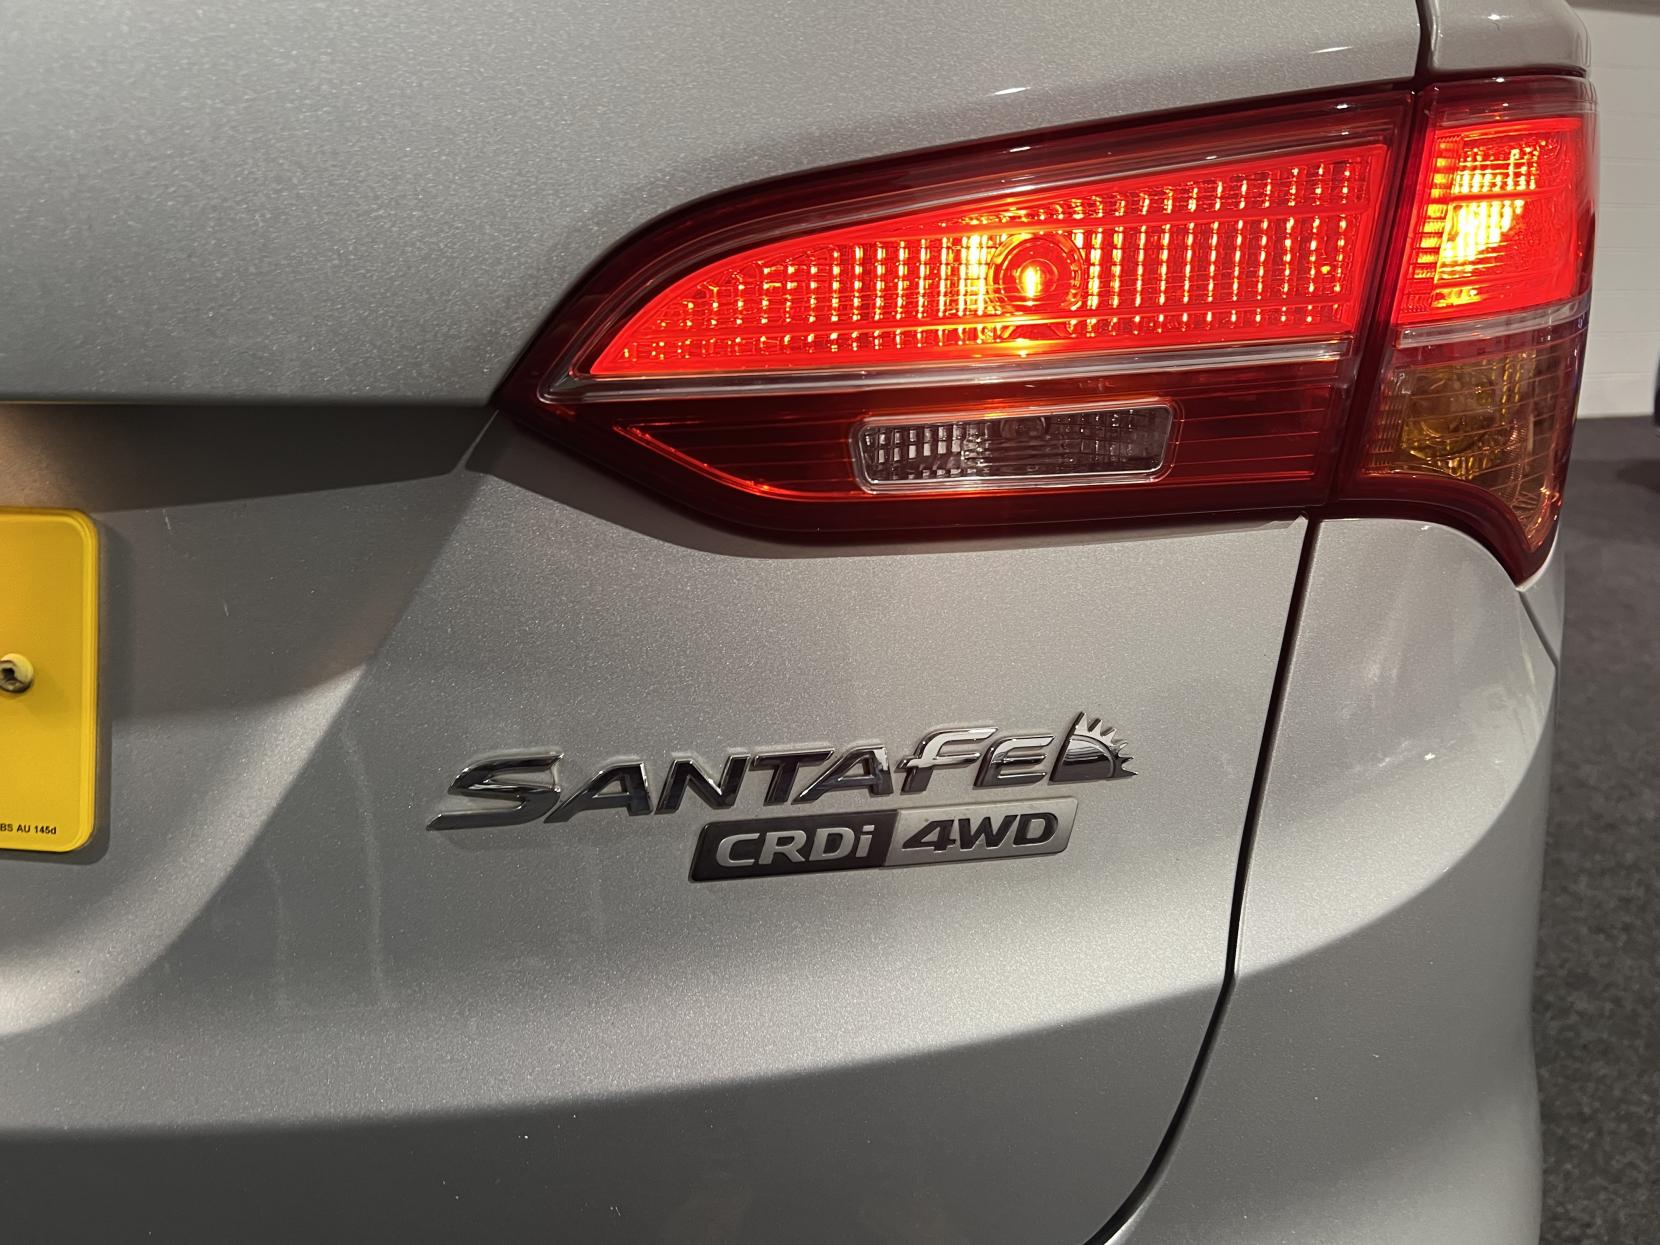 Hyundai Santa Fe 2.2 CRDi Premium SUV 5dr Diesel Auto 4WD Euro 5 (5 seat) (194 bhp)